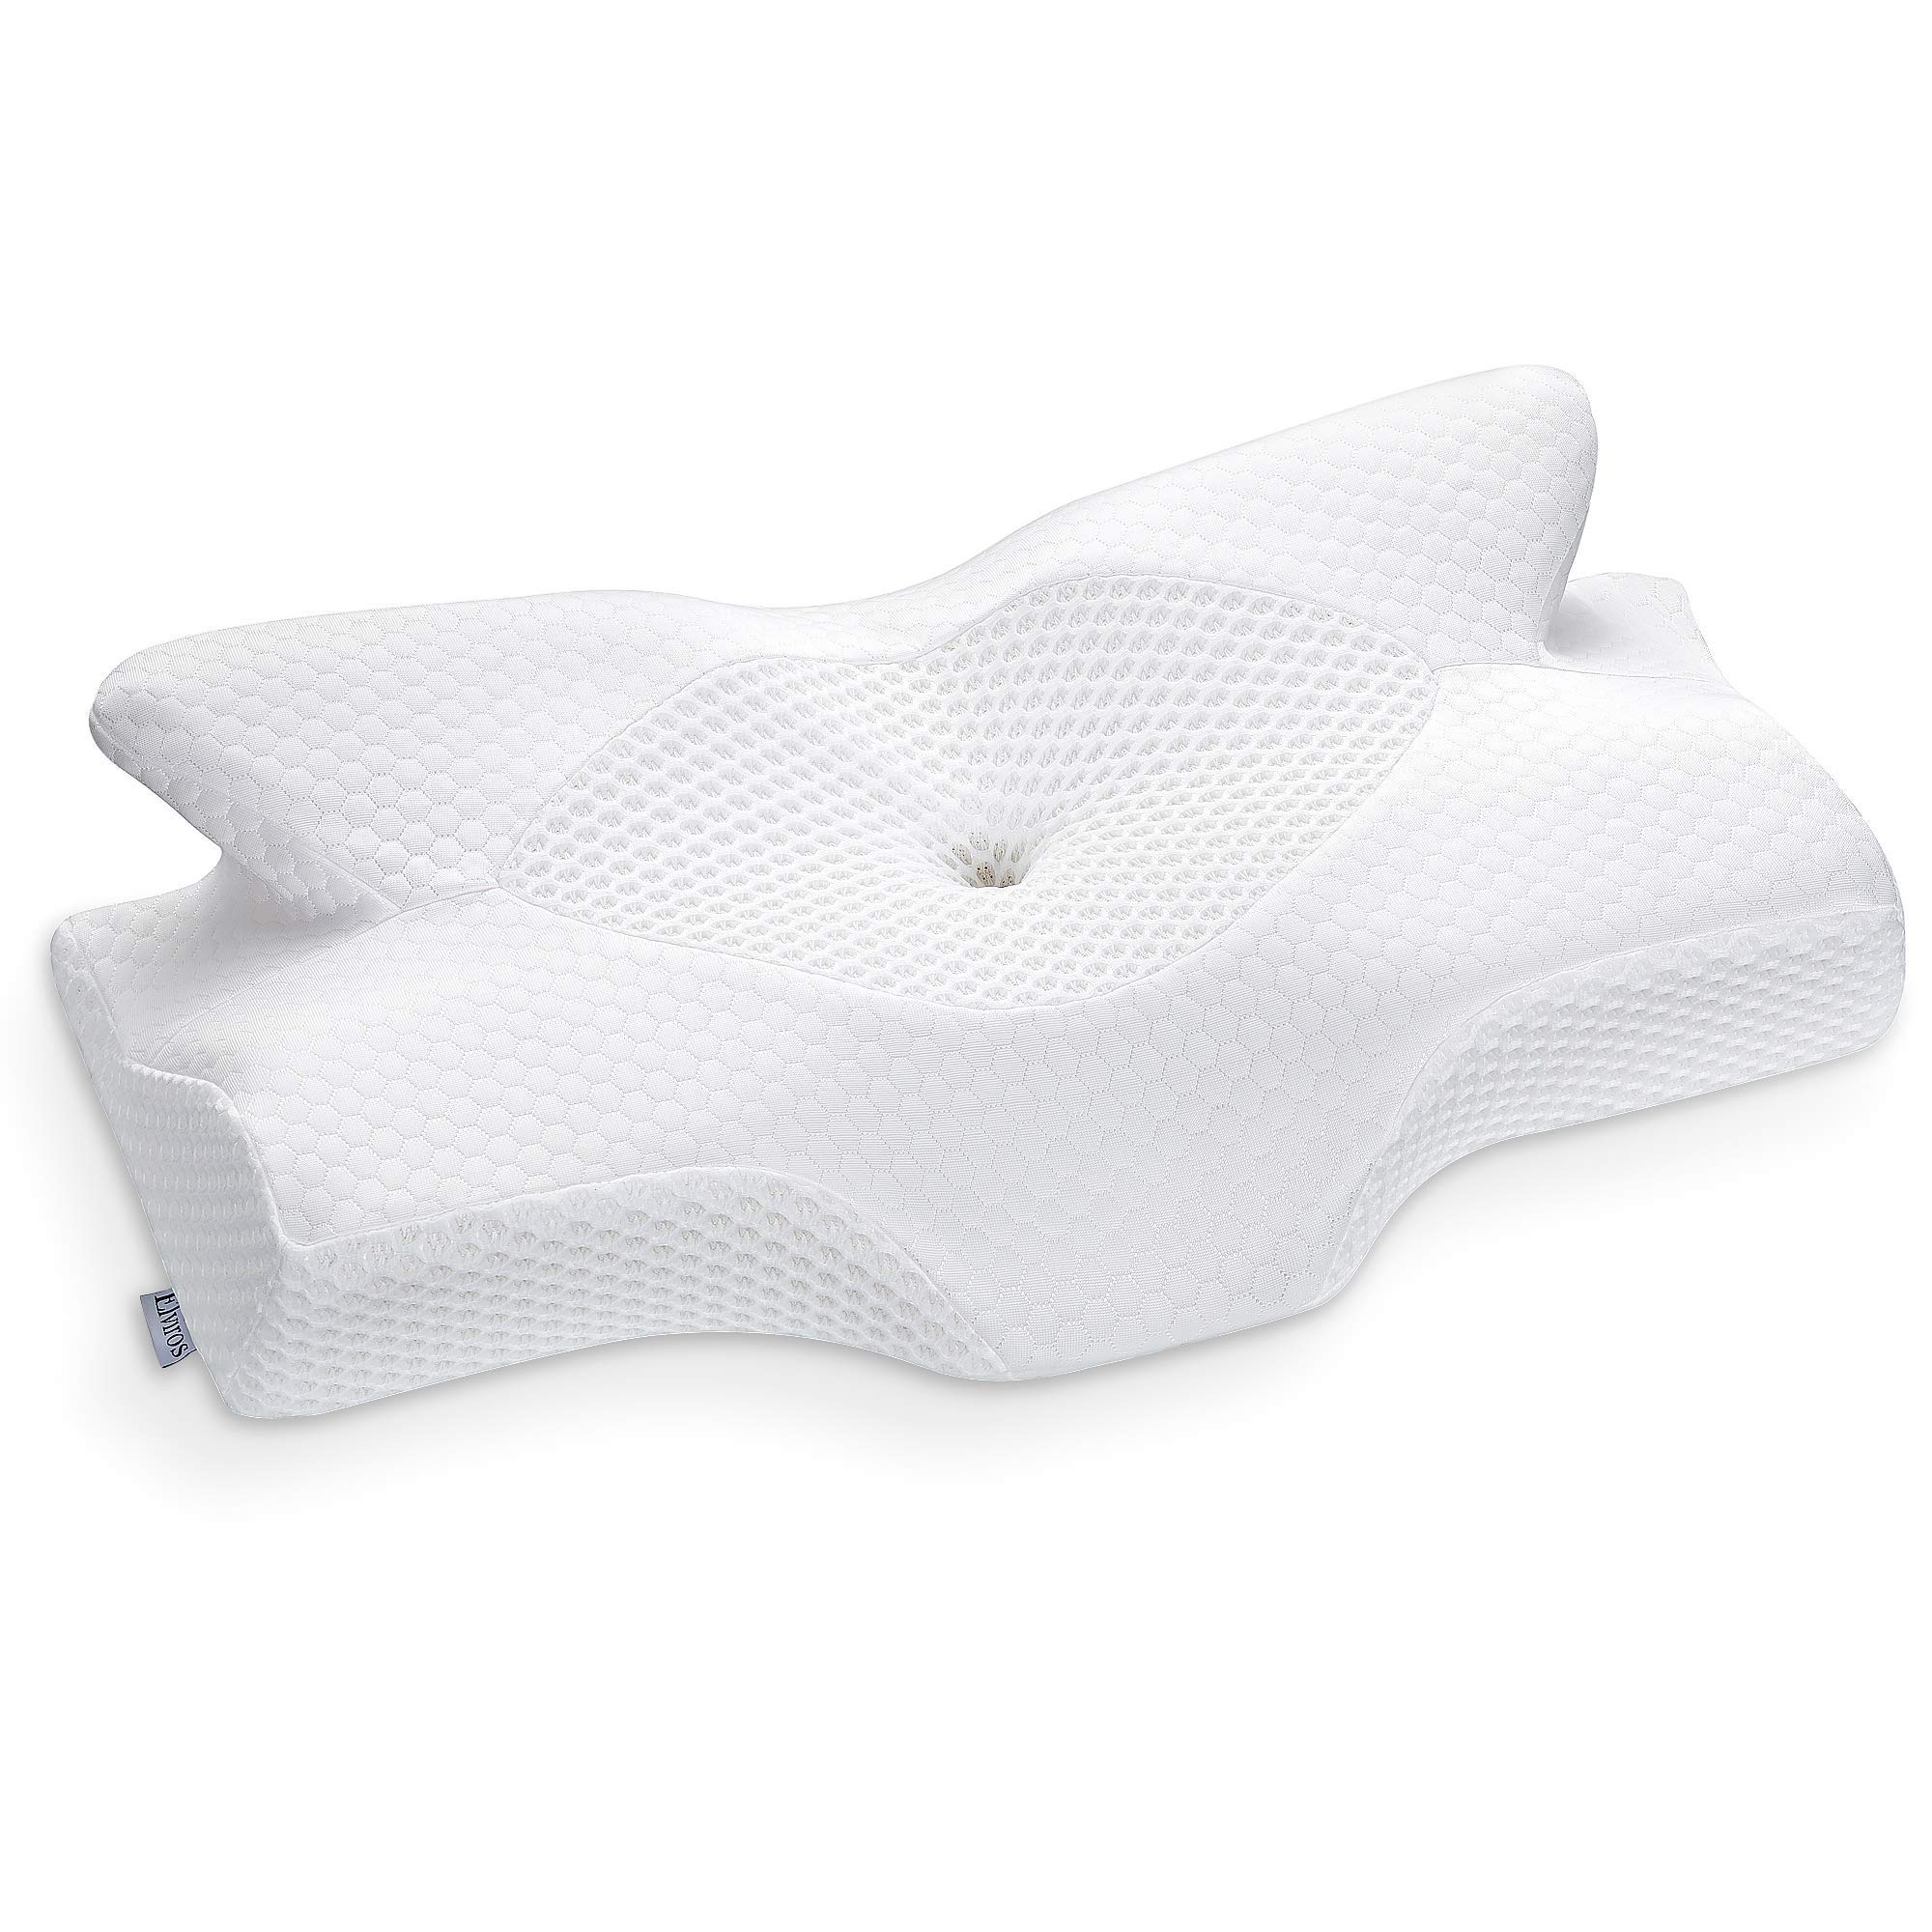 Elviros Cervical Memory Foam Pillow, Contour Pillows for Neck and Shoulder Pain, Ergonomic Orthopedic Sleeping Neck Contoured Support Pillow $15.49